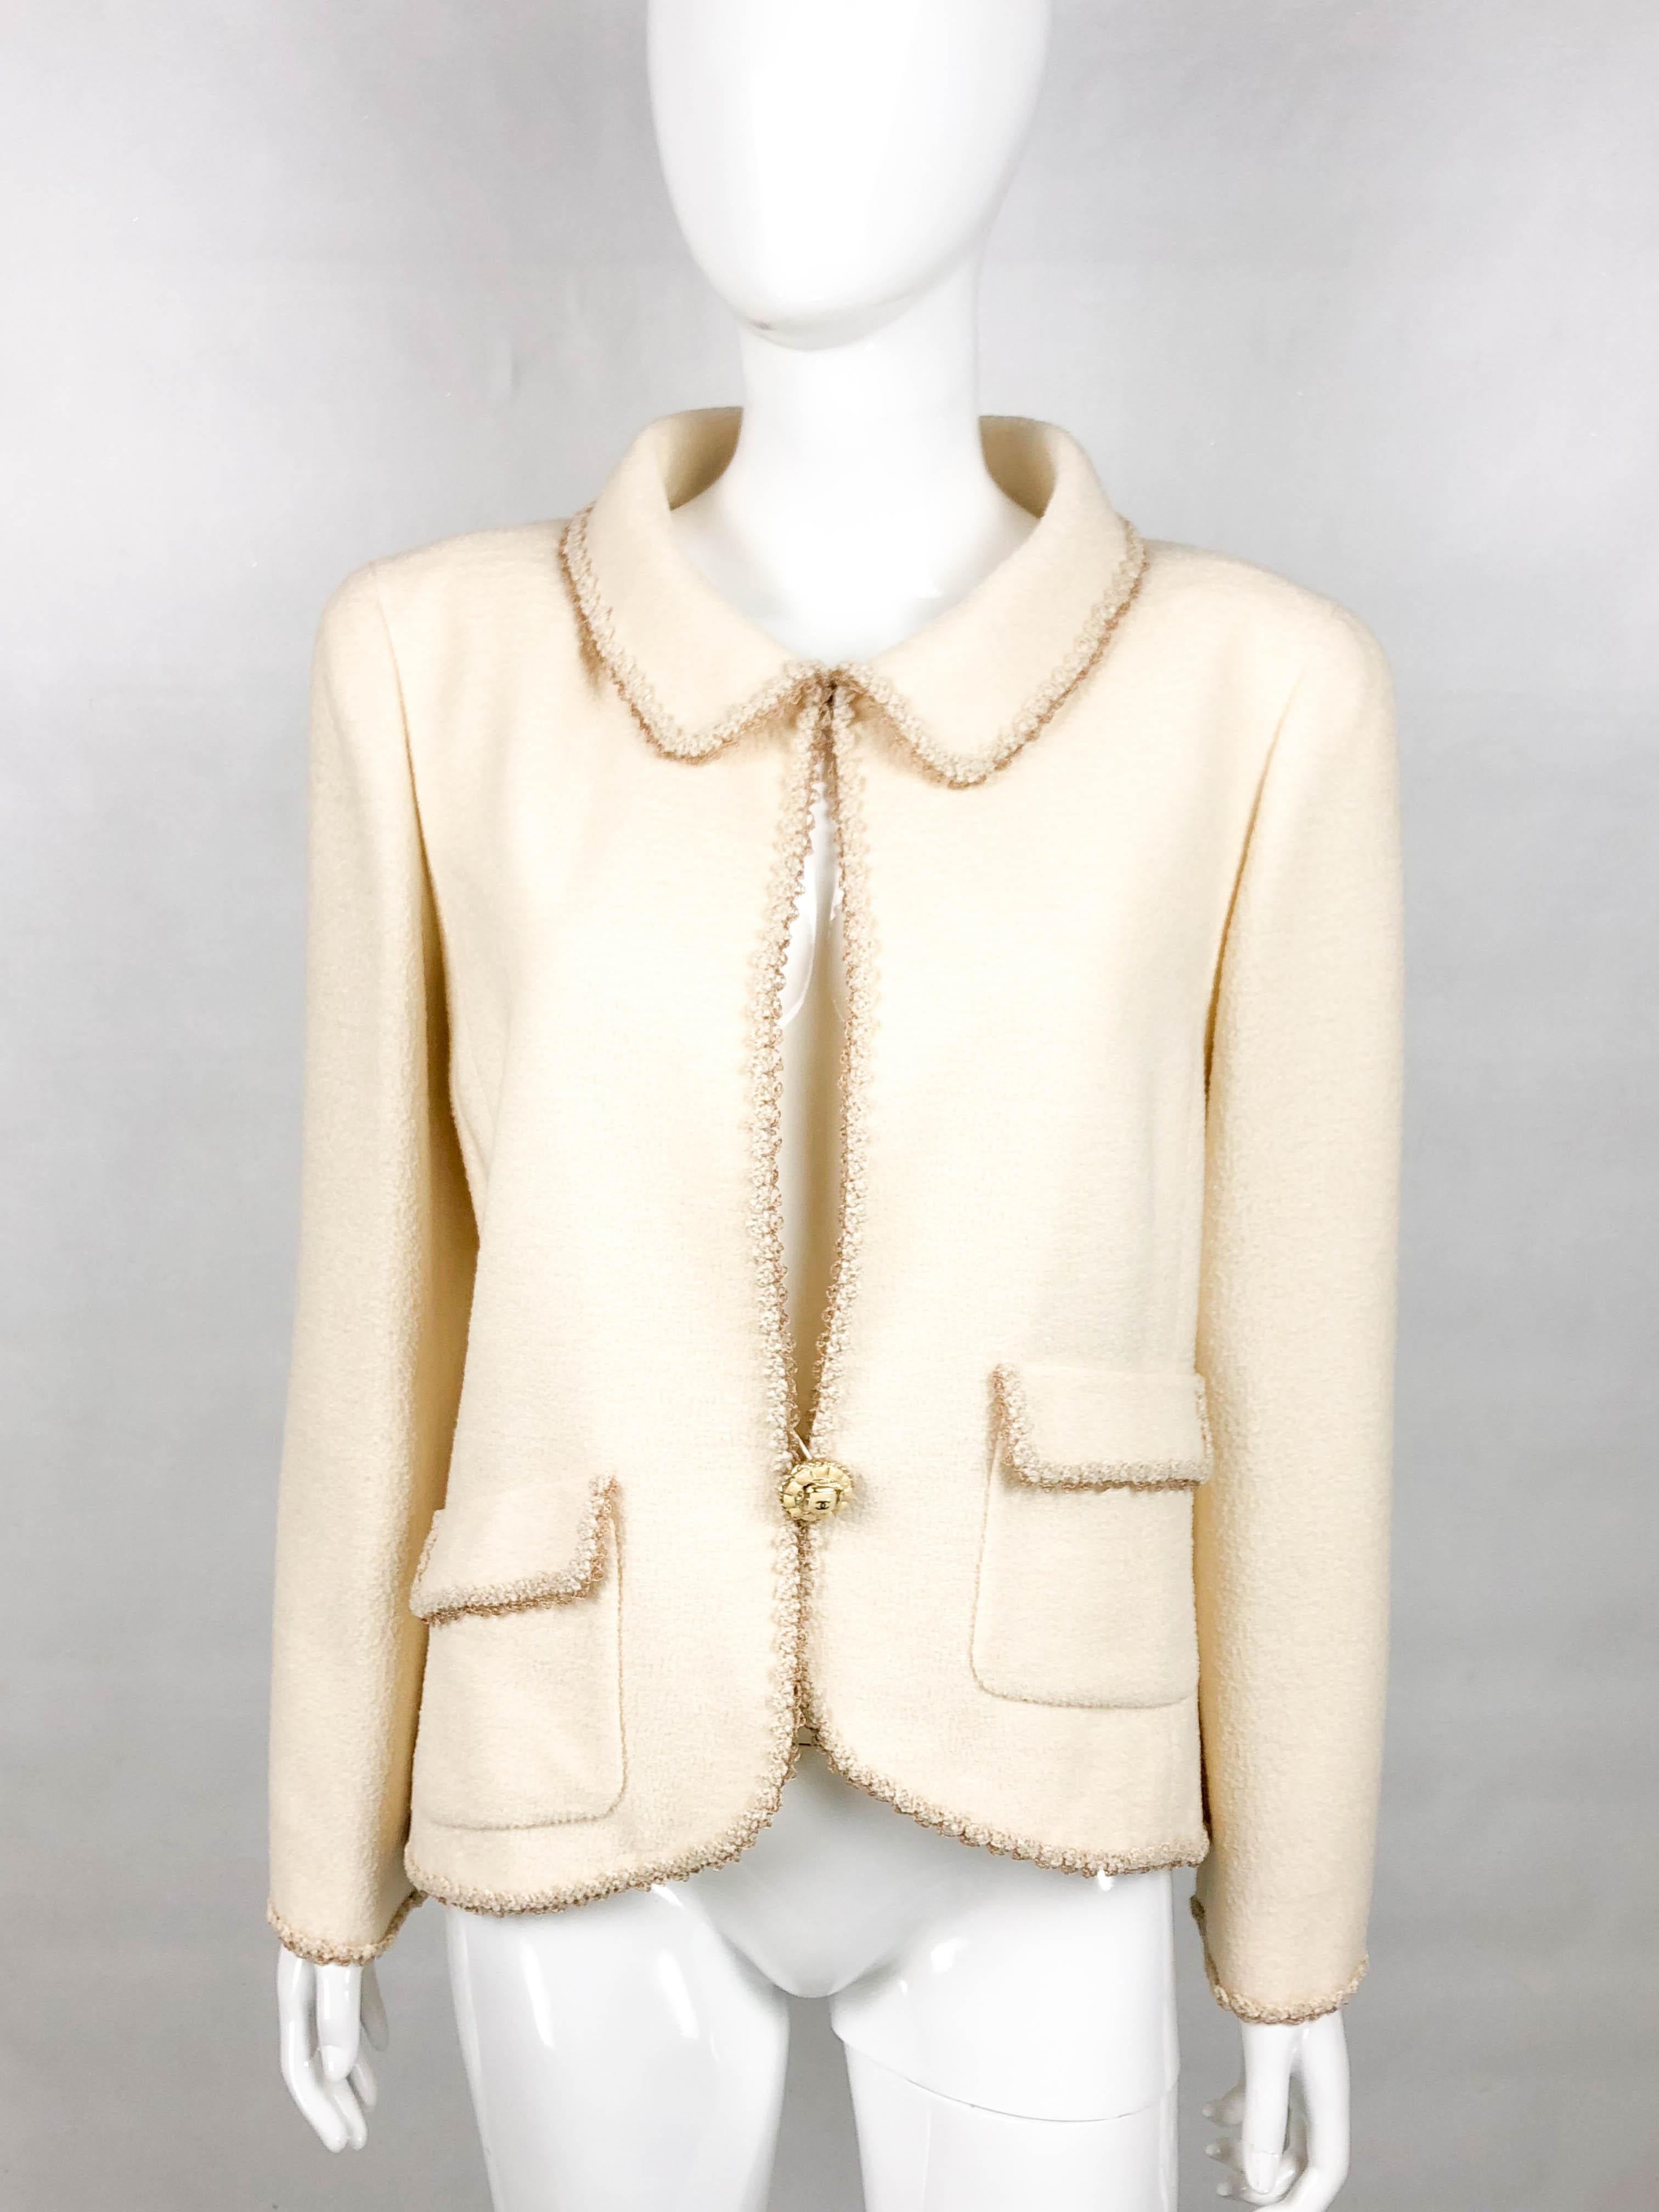 2010 Unworn Chanel Runway Cream Jacket and Dress Ensemble With Gold Thread Trim 6